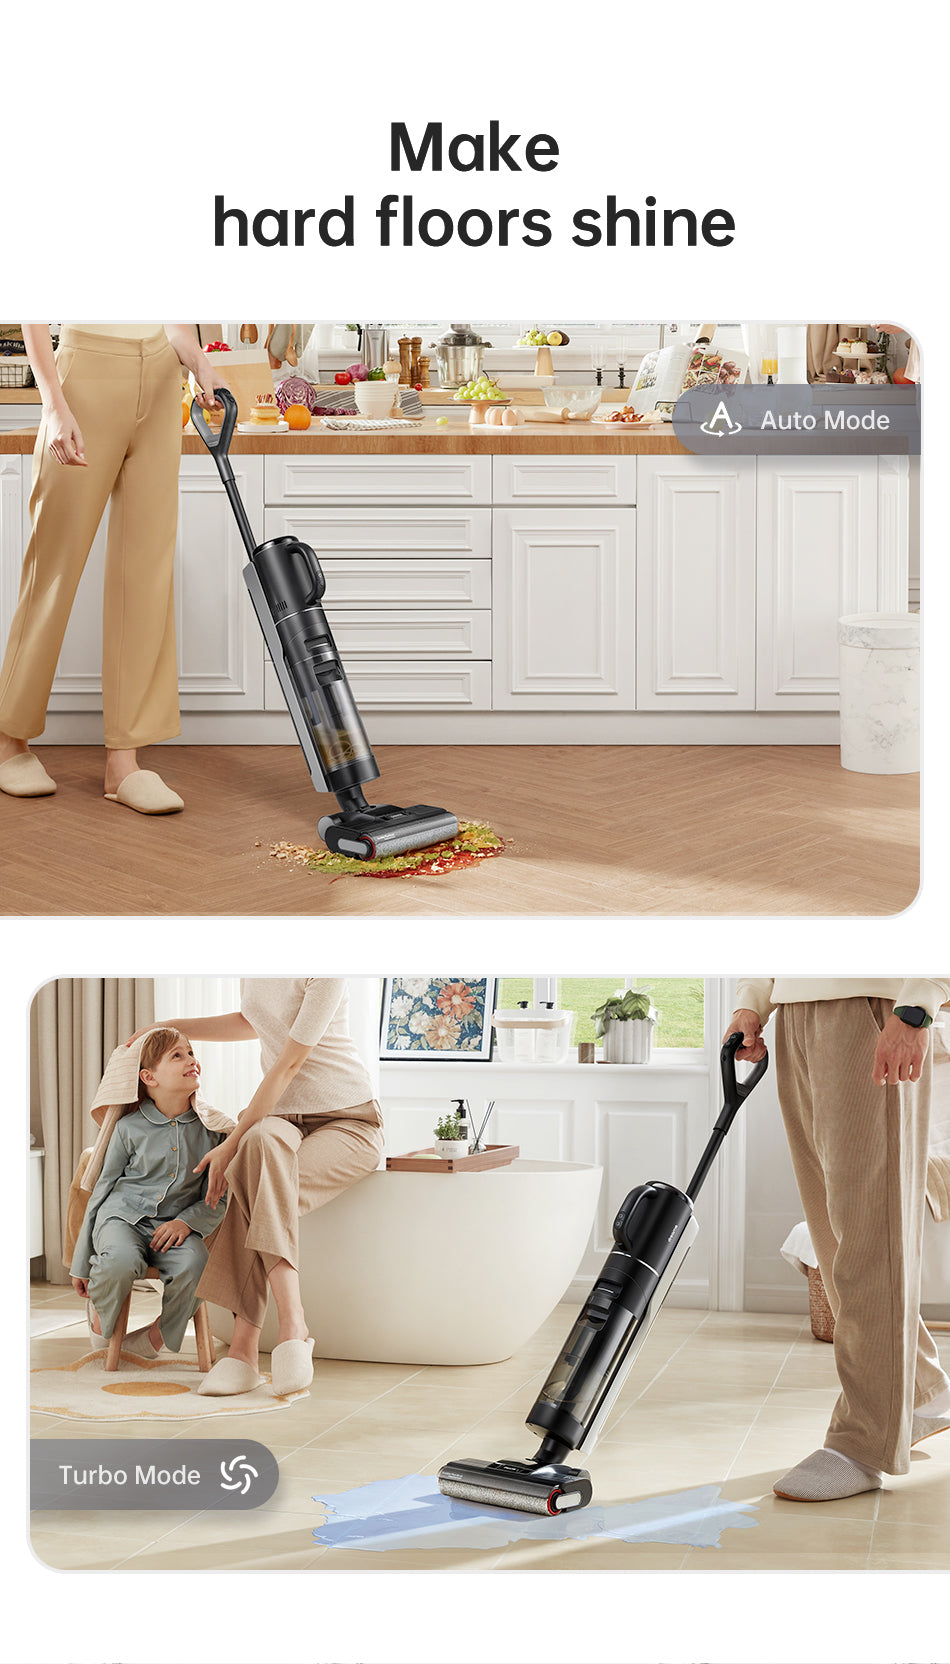 Dreame Cordless Vacuum Cleaner, Dream Cordless Vacuum Cleaner, Dreame H12